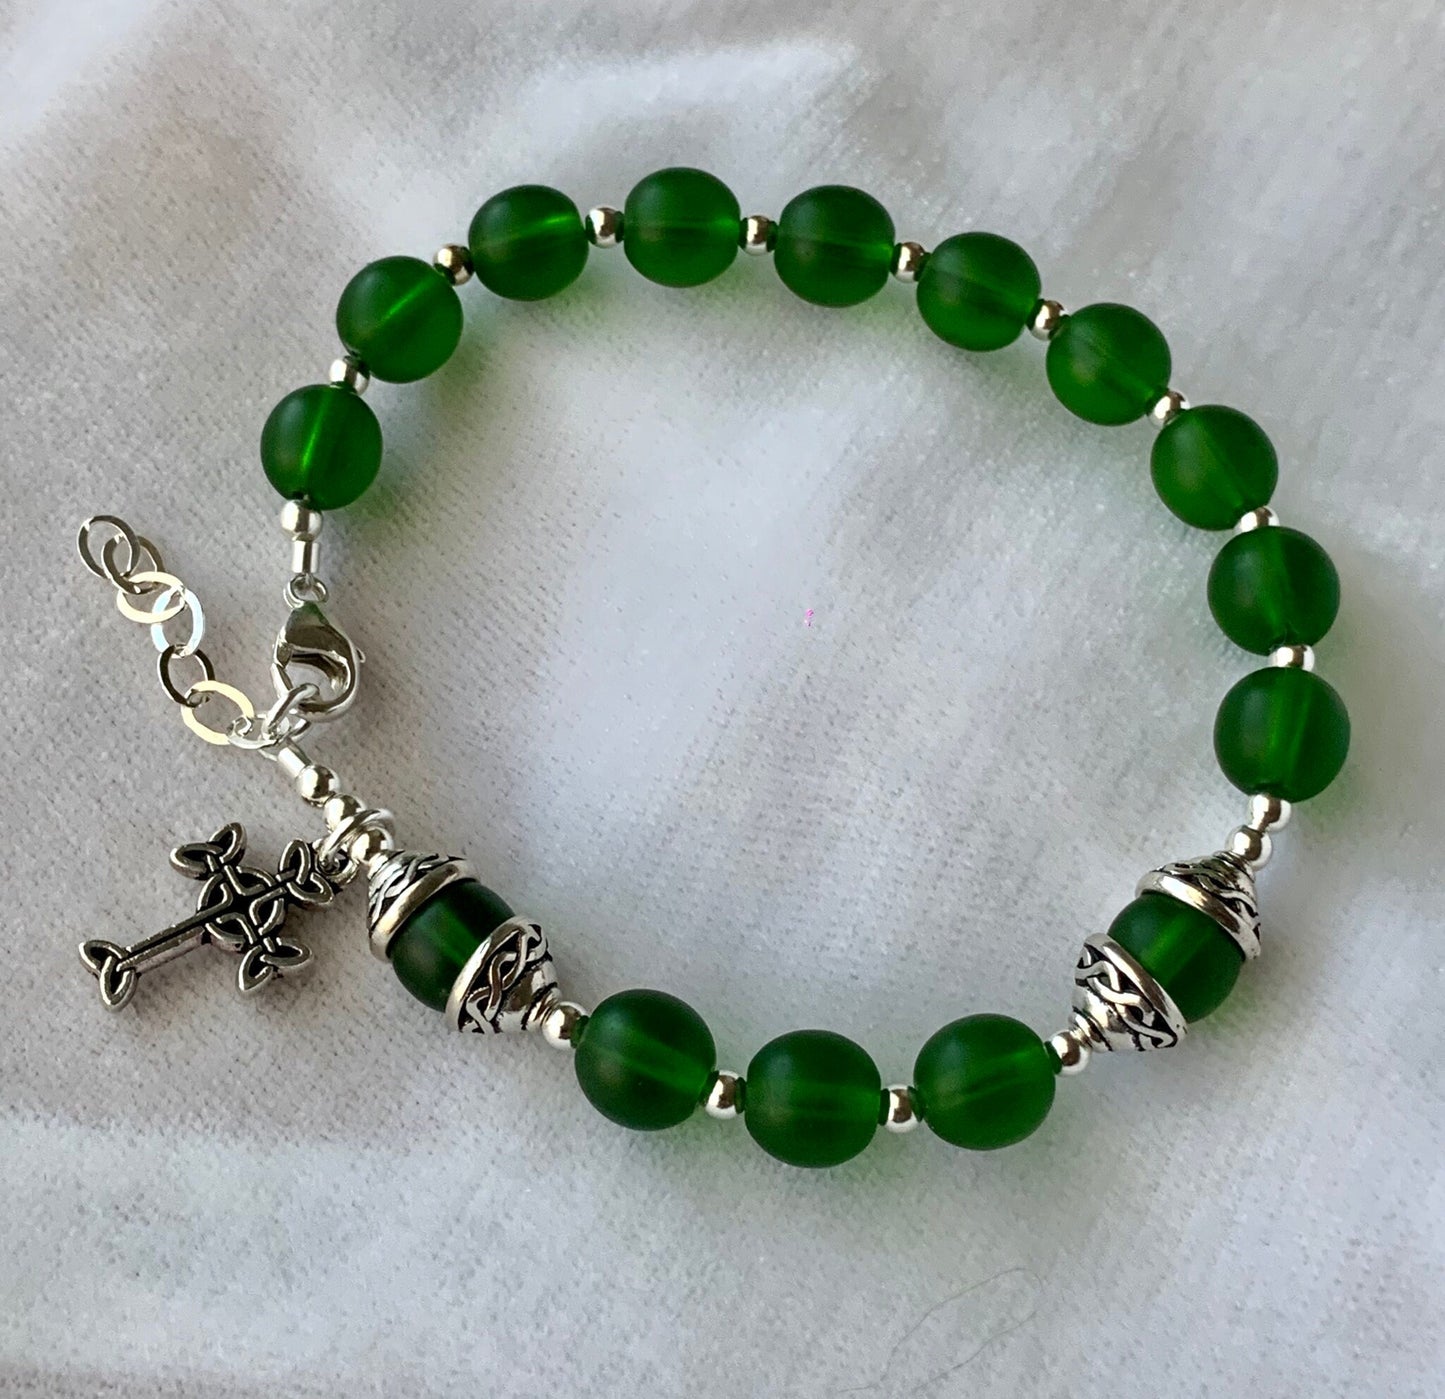 Green Celtic Sea Glass Rosary Bracelet,Celtic Rosary Bracelet,One Decade Rosary Bracelet, Celtic Irish Knot Rosary Bracelet, First Communion